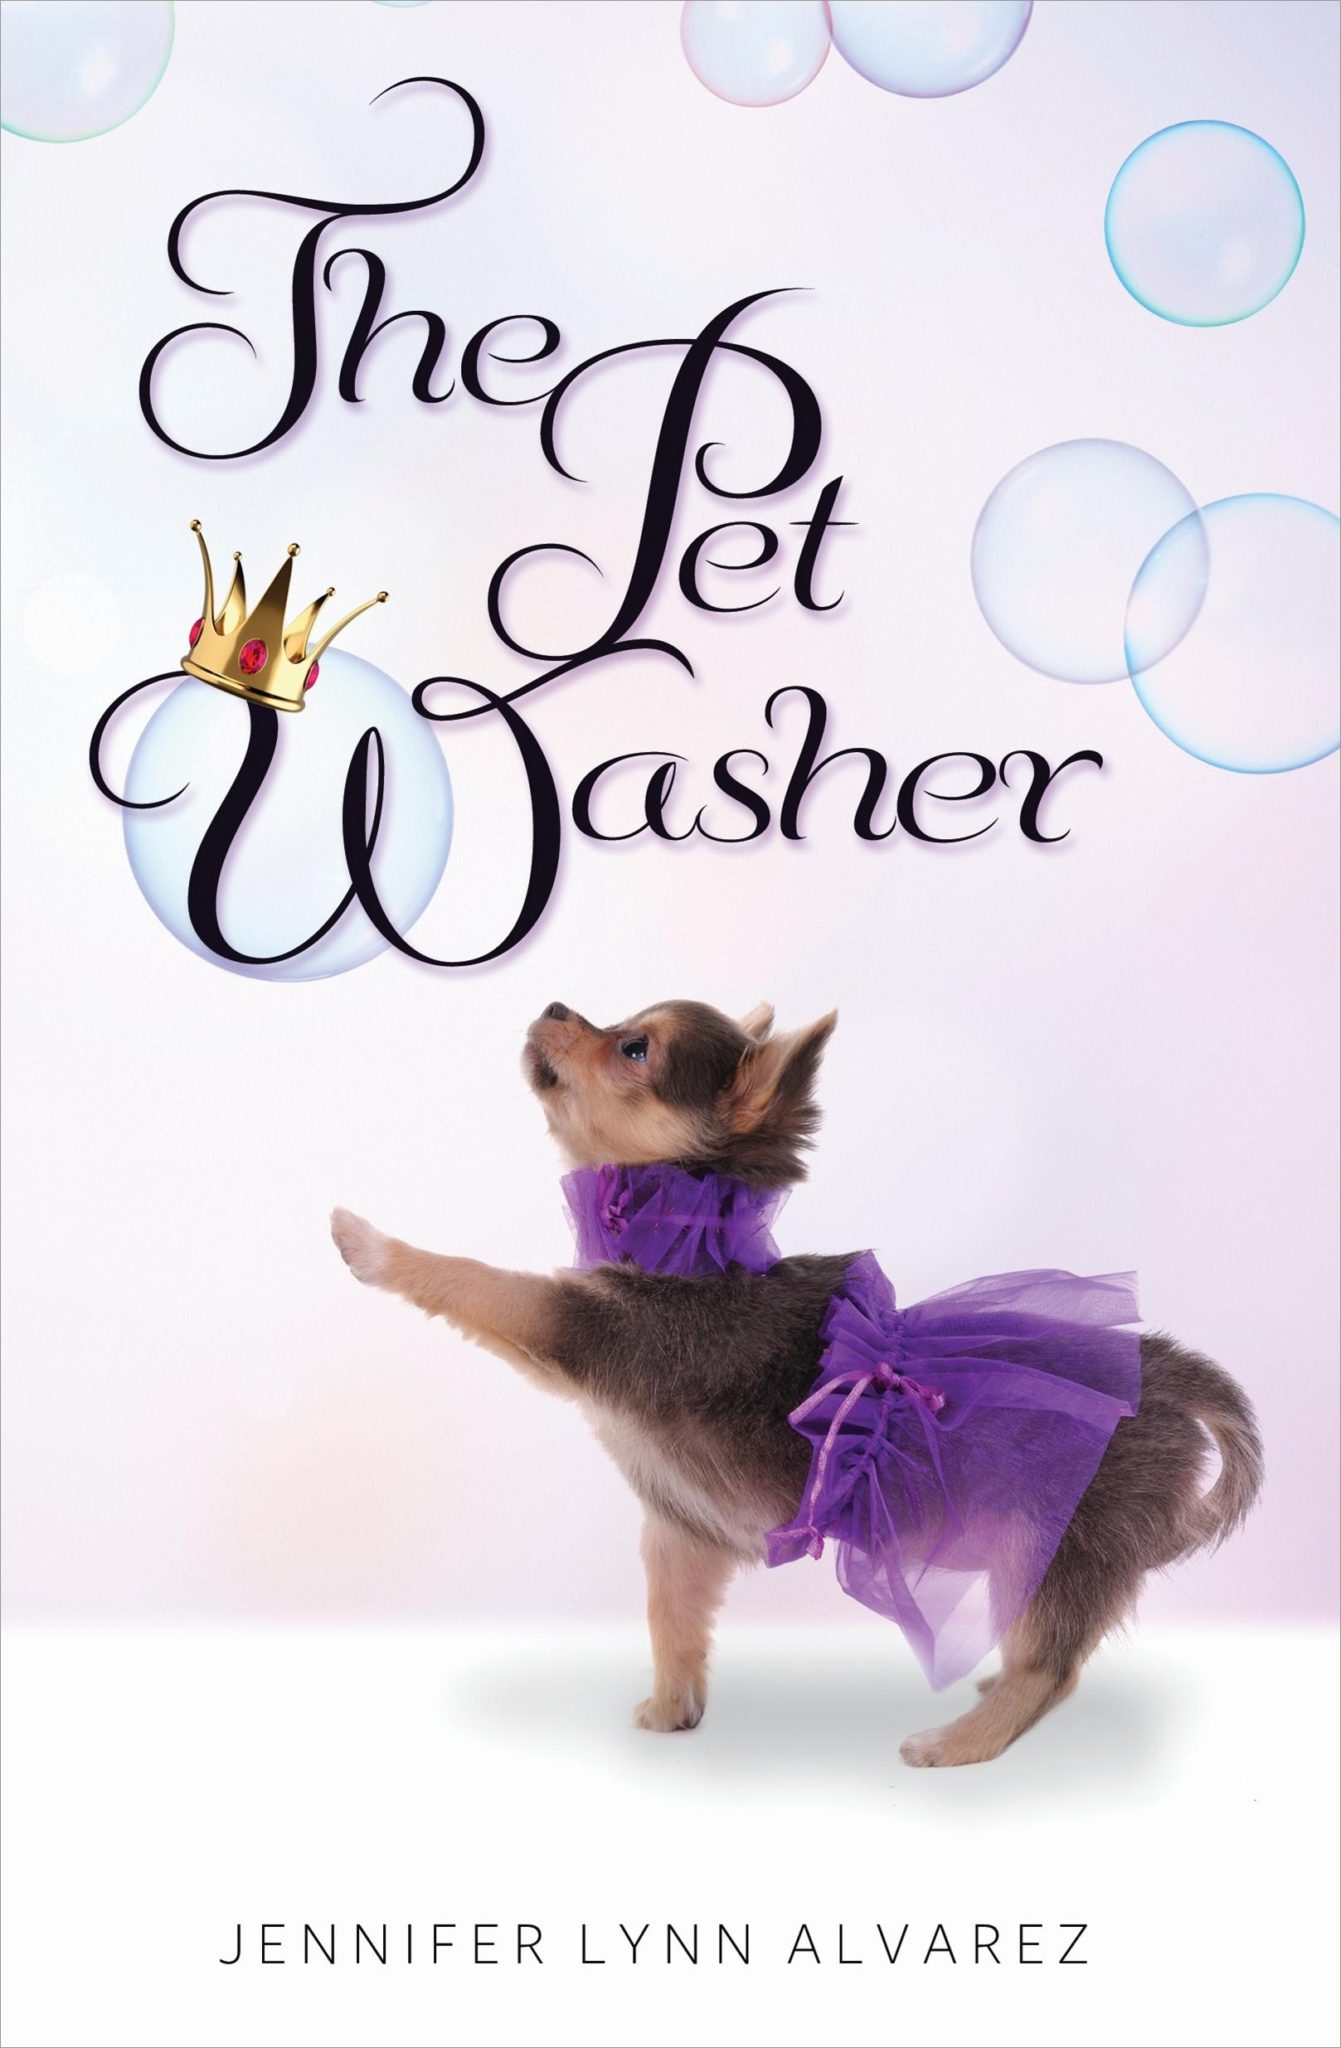 FREE: The Pet Washer by Jennifer Lynn Alvarez